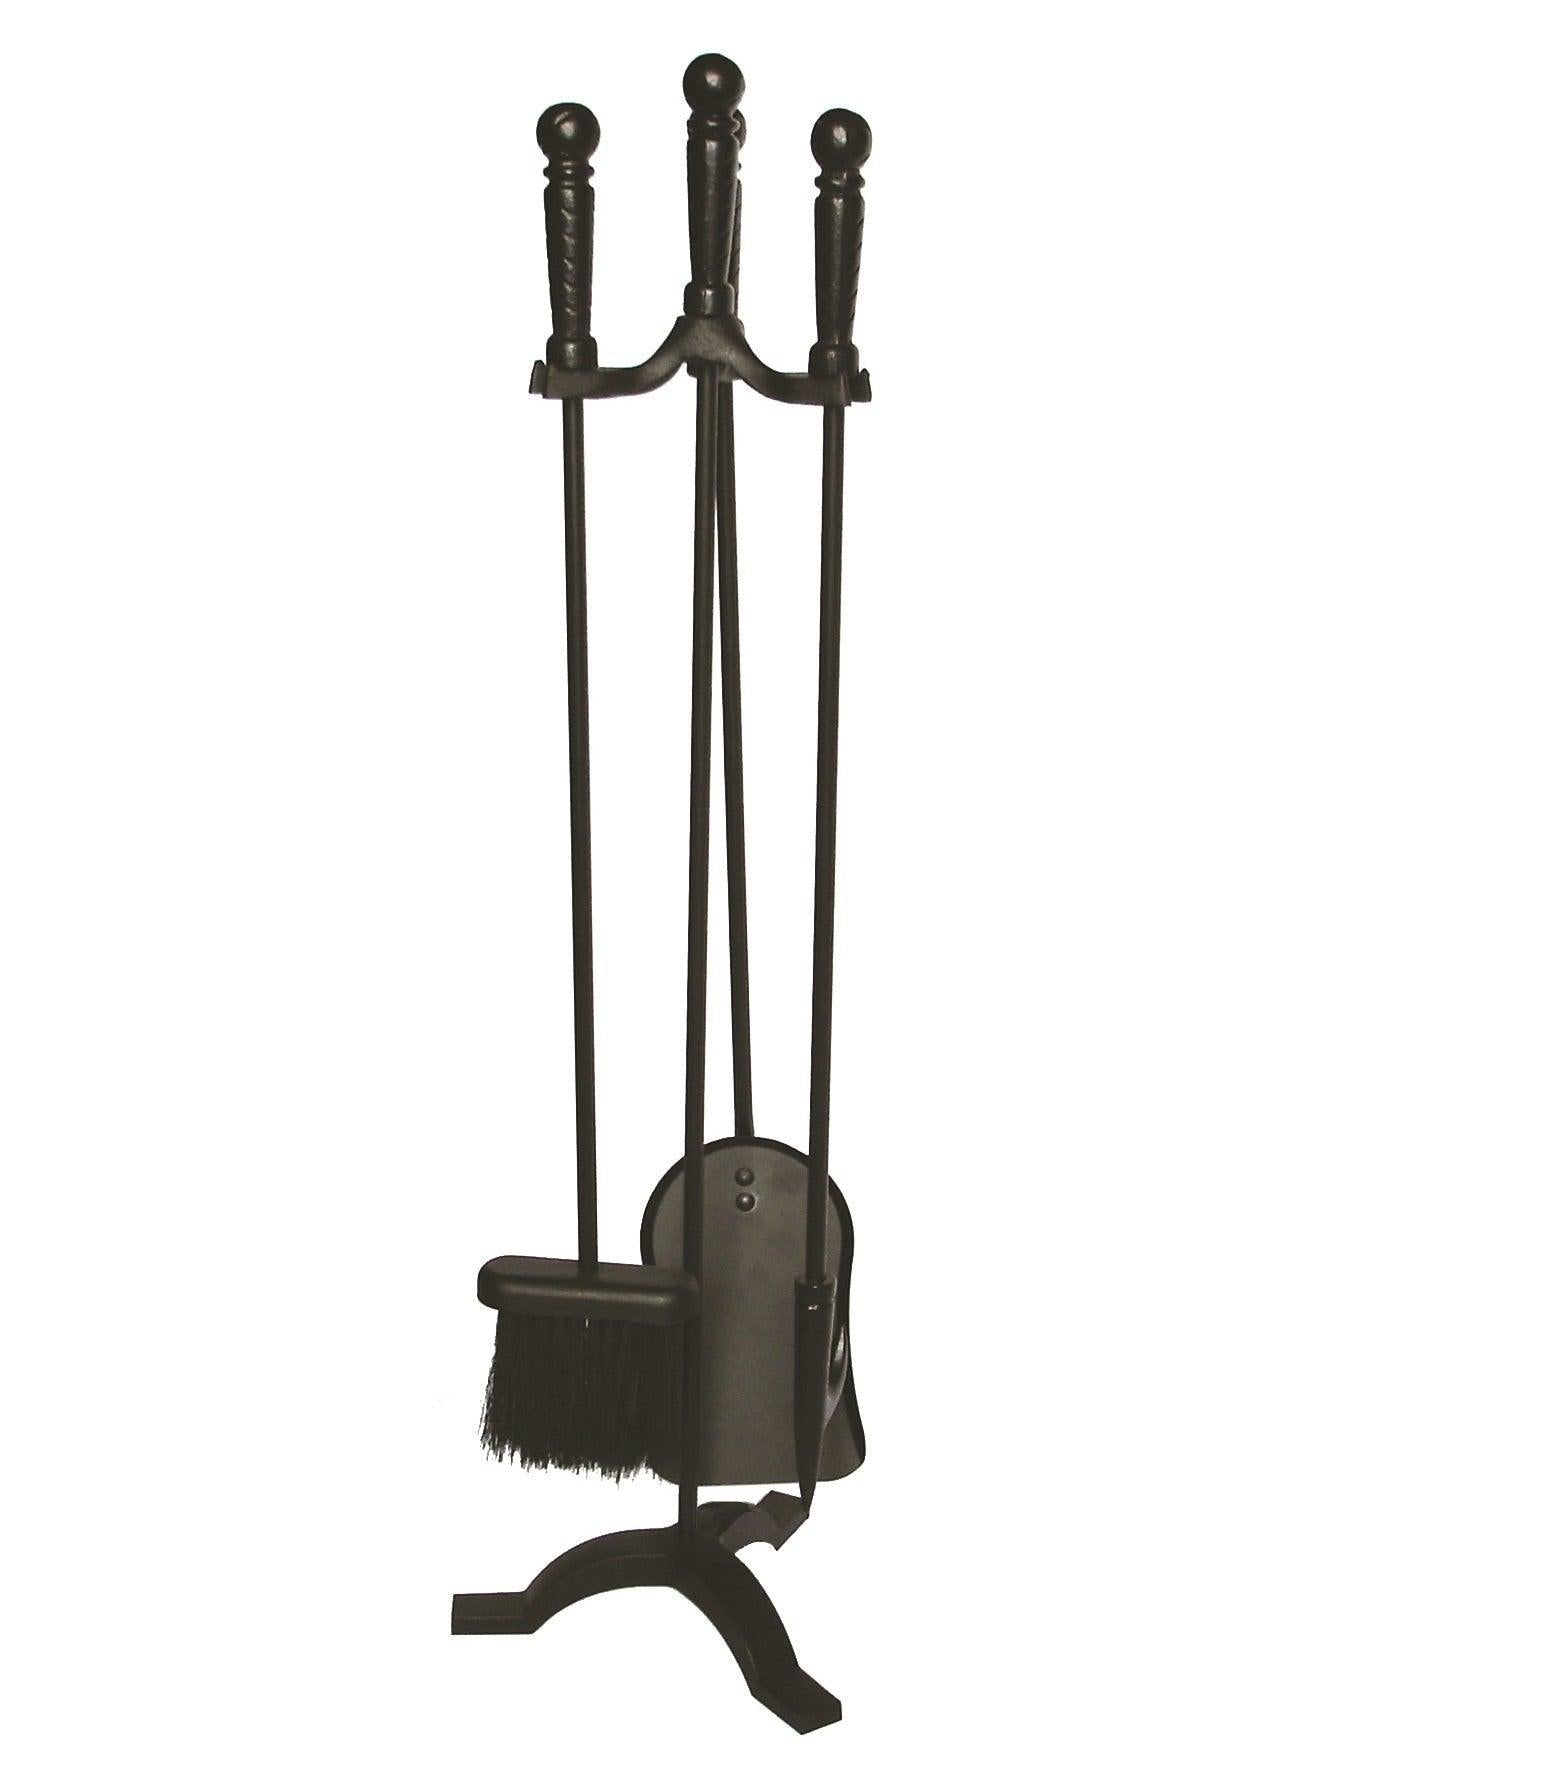 FireUp Fire Tools - Economy Range Tall Black 3 Piece Set, Heater Accessories, S&D Berg